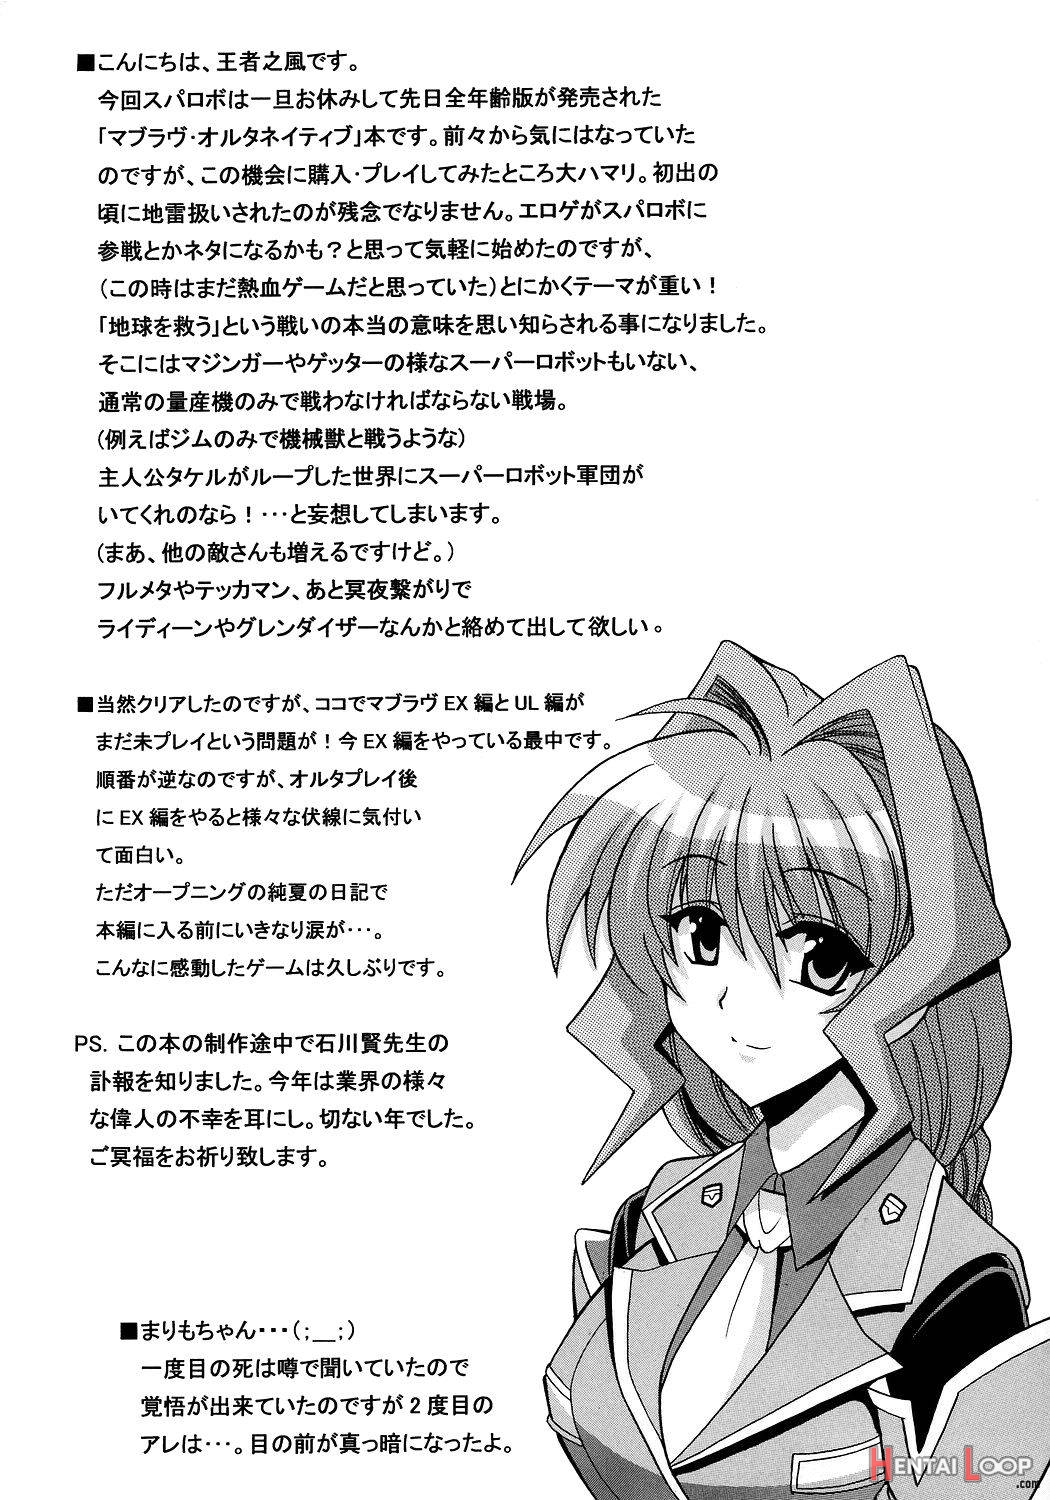 Kasumi Maniax page 4